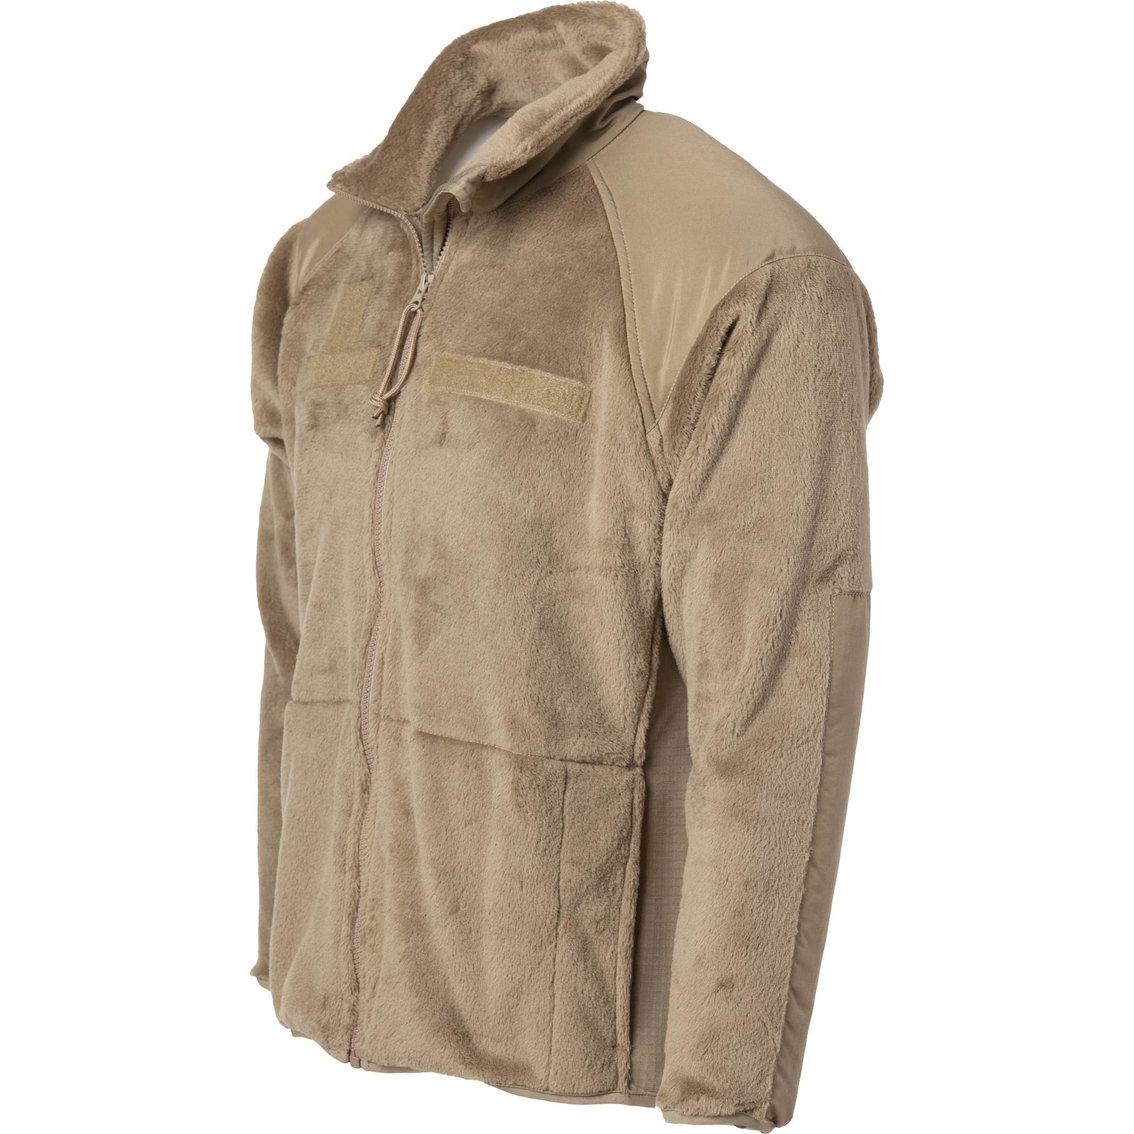 US Military Surplus Black Polartec Fleece Jacket - For Sale